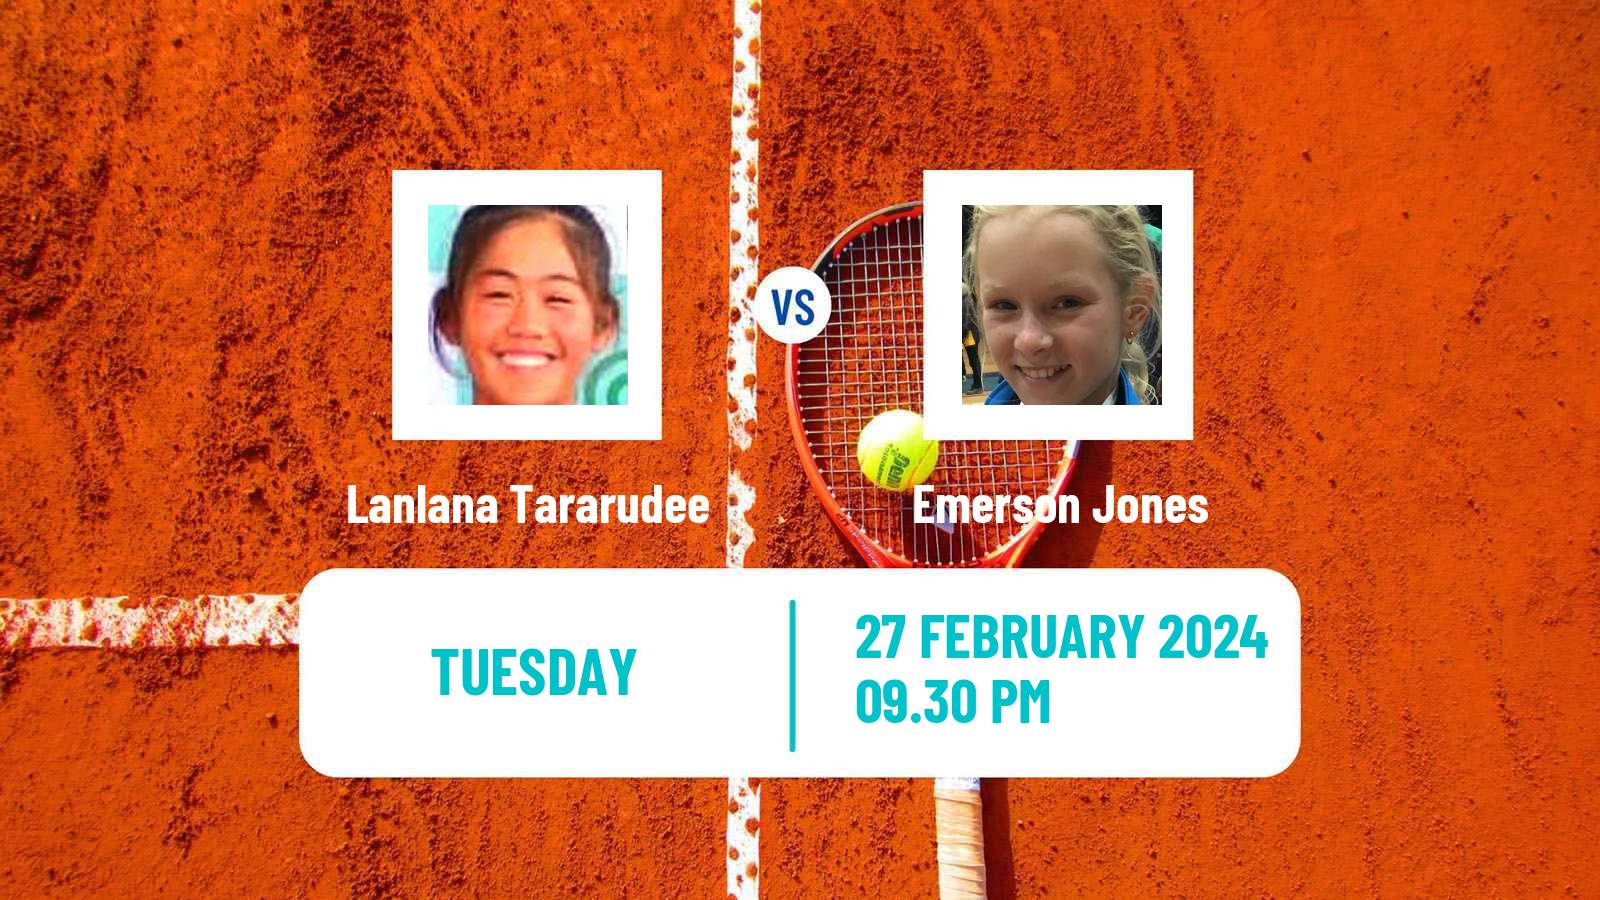 Tennis ITF W35 Traralgon 2 Women Lanlana Tararudee - Emerson Jones